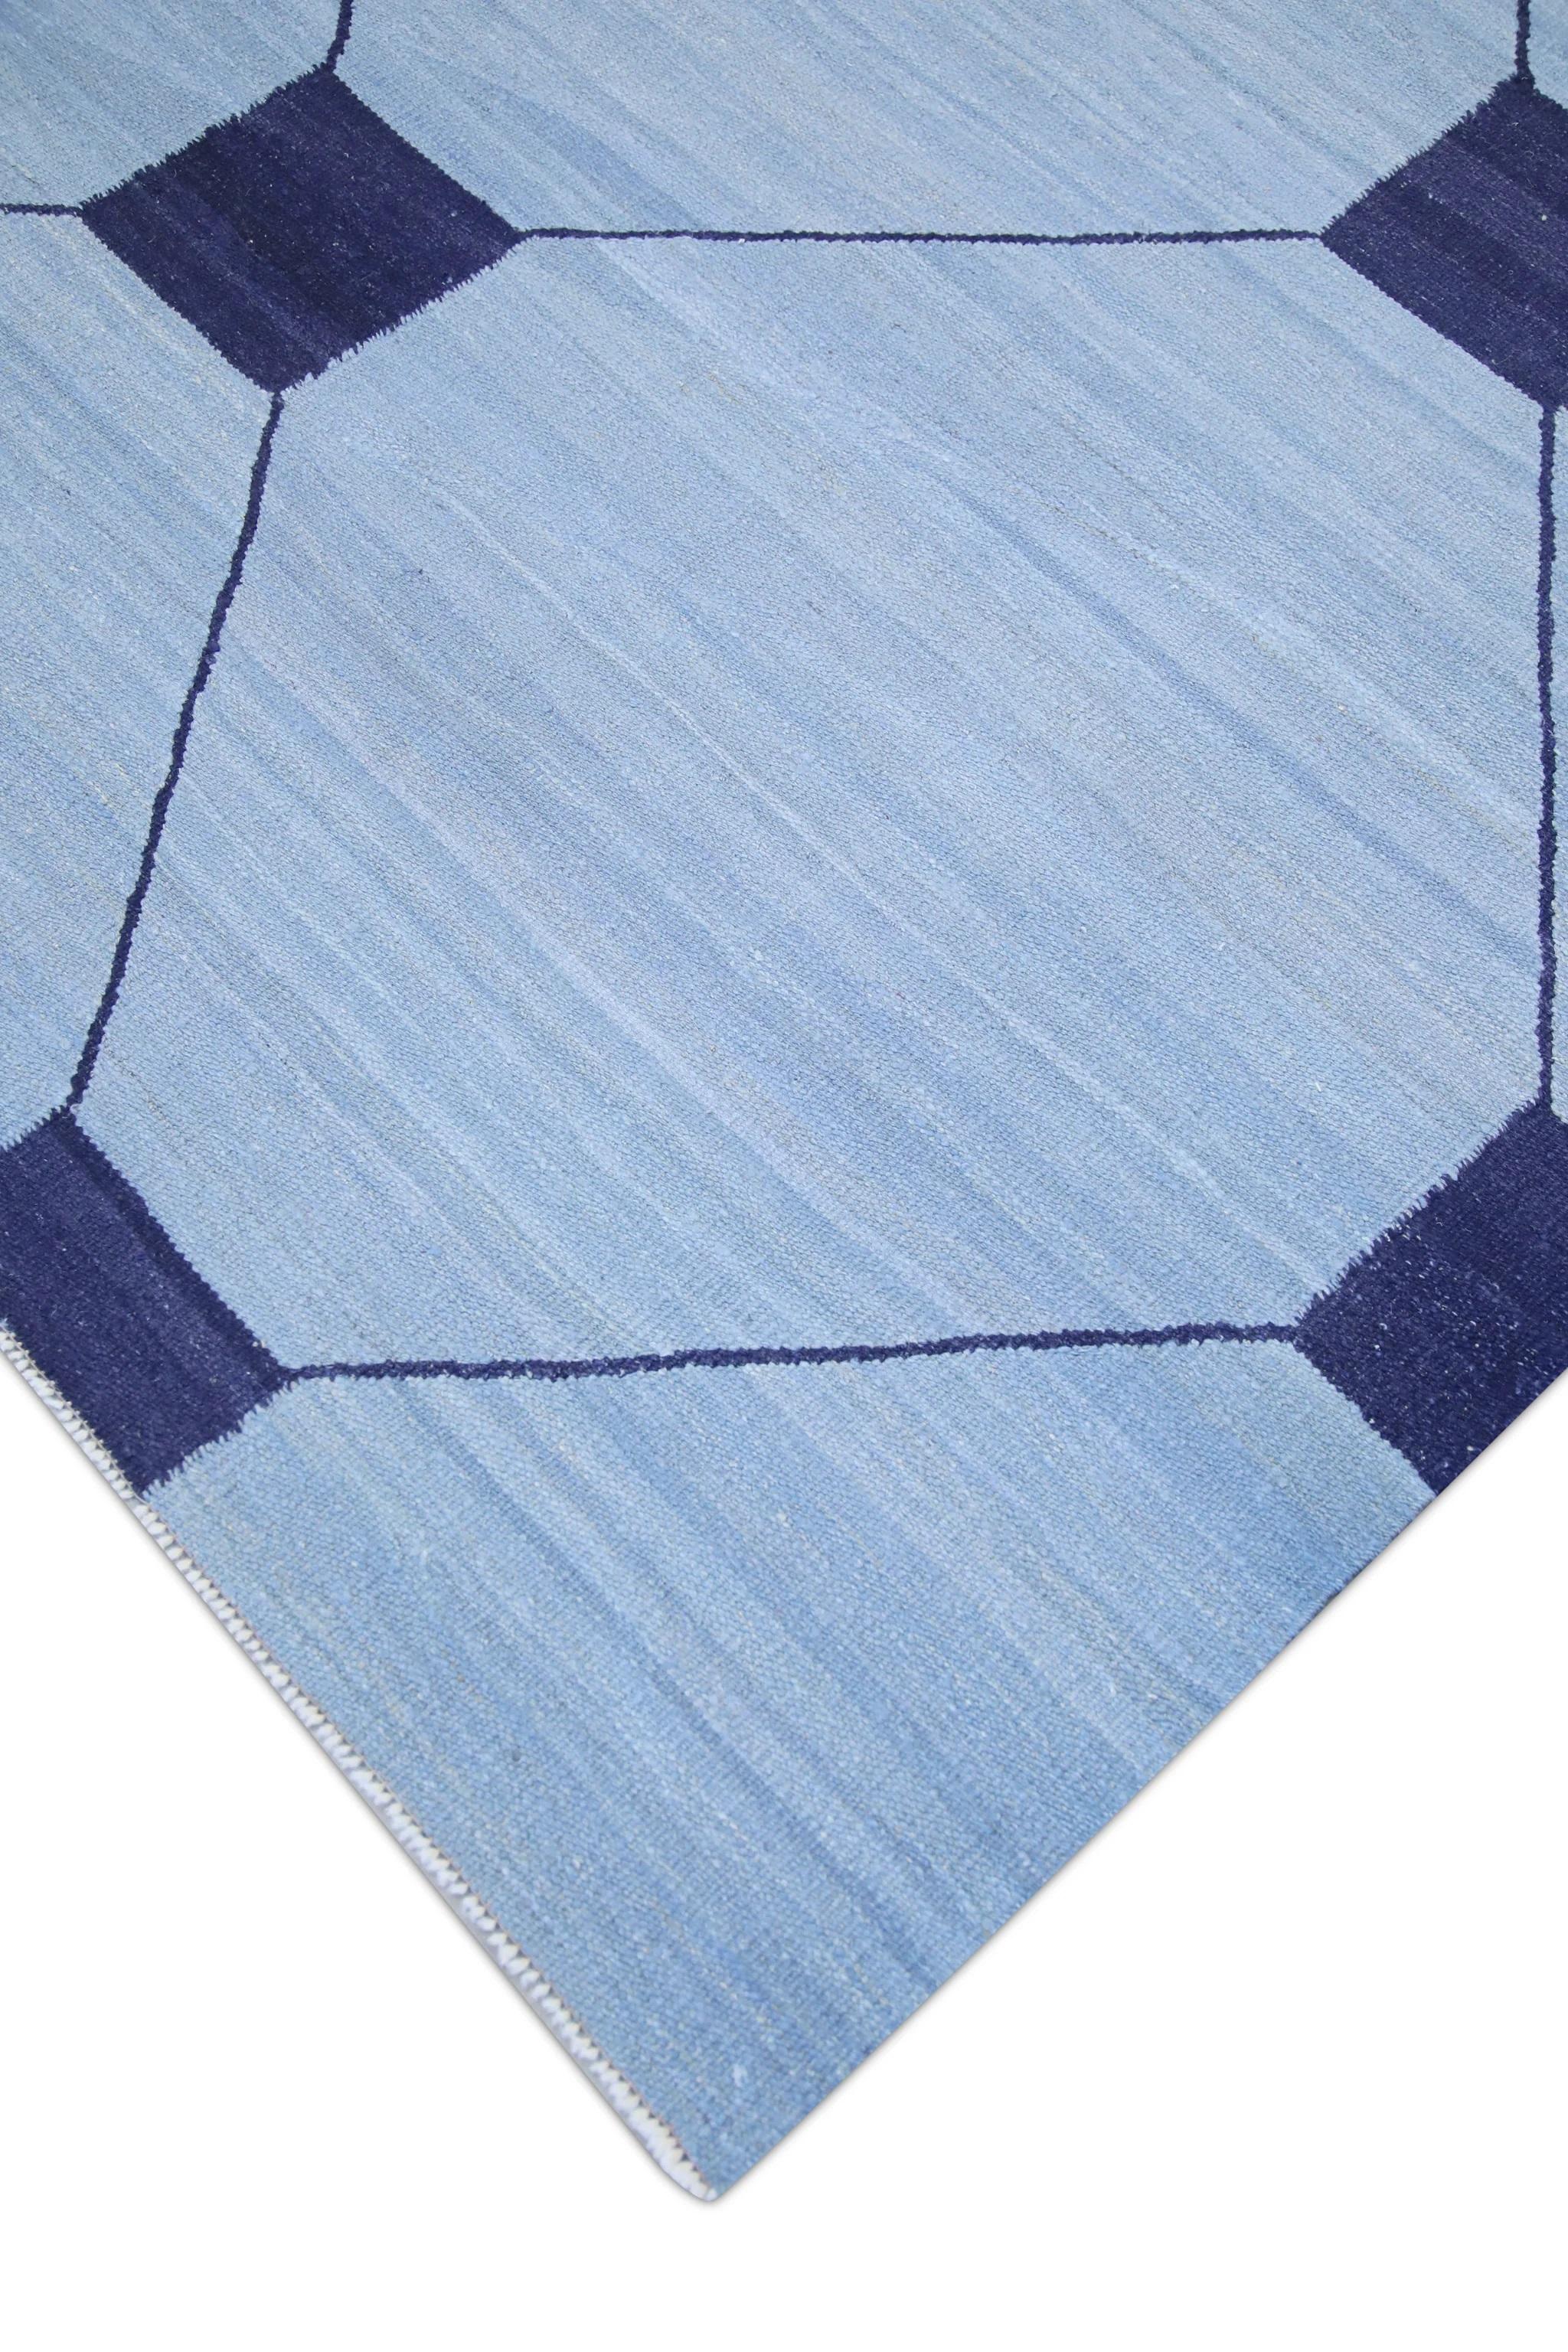 Turkish Blue & Navy Geometric Design Flatweave Handmade Wool Rug 10' X 14'7